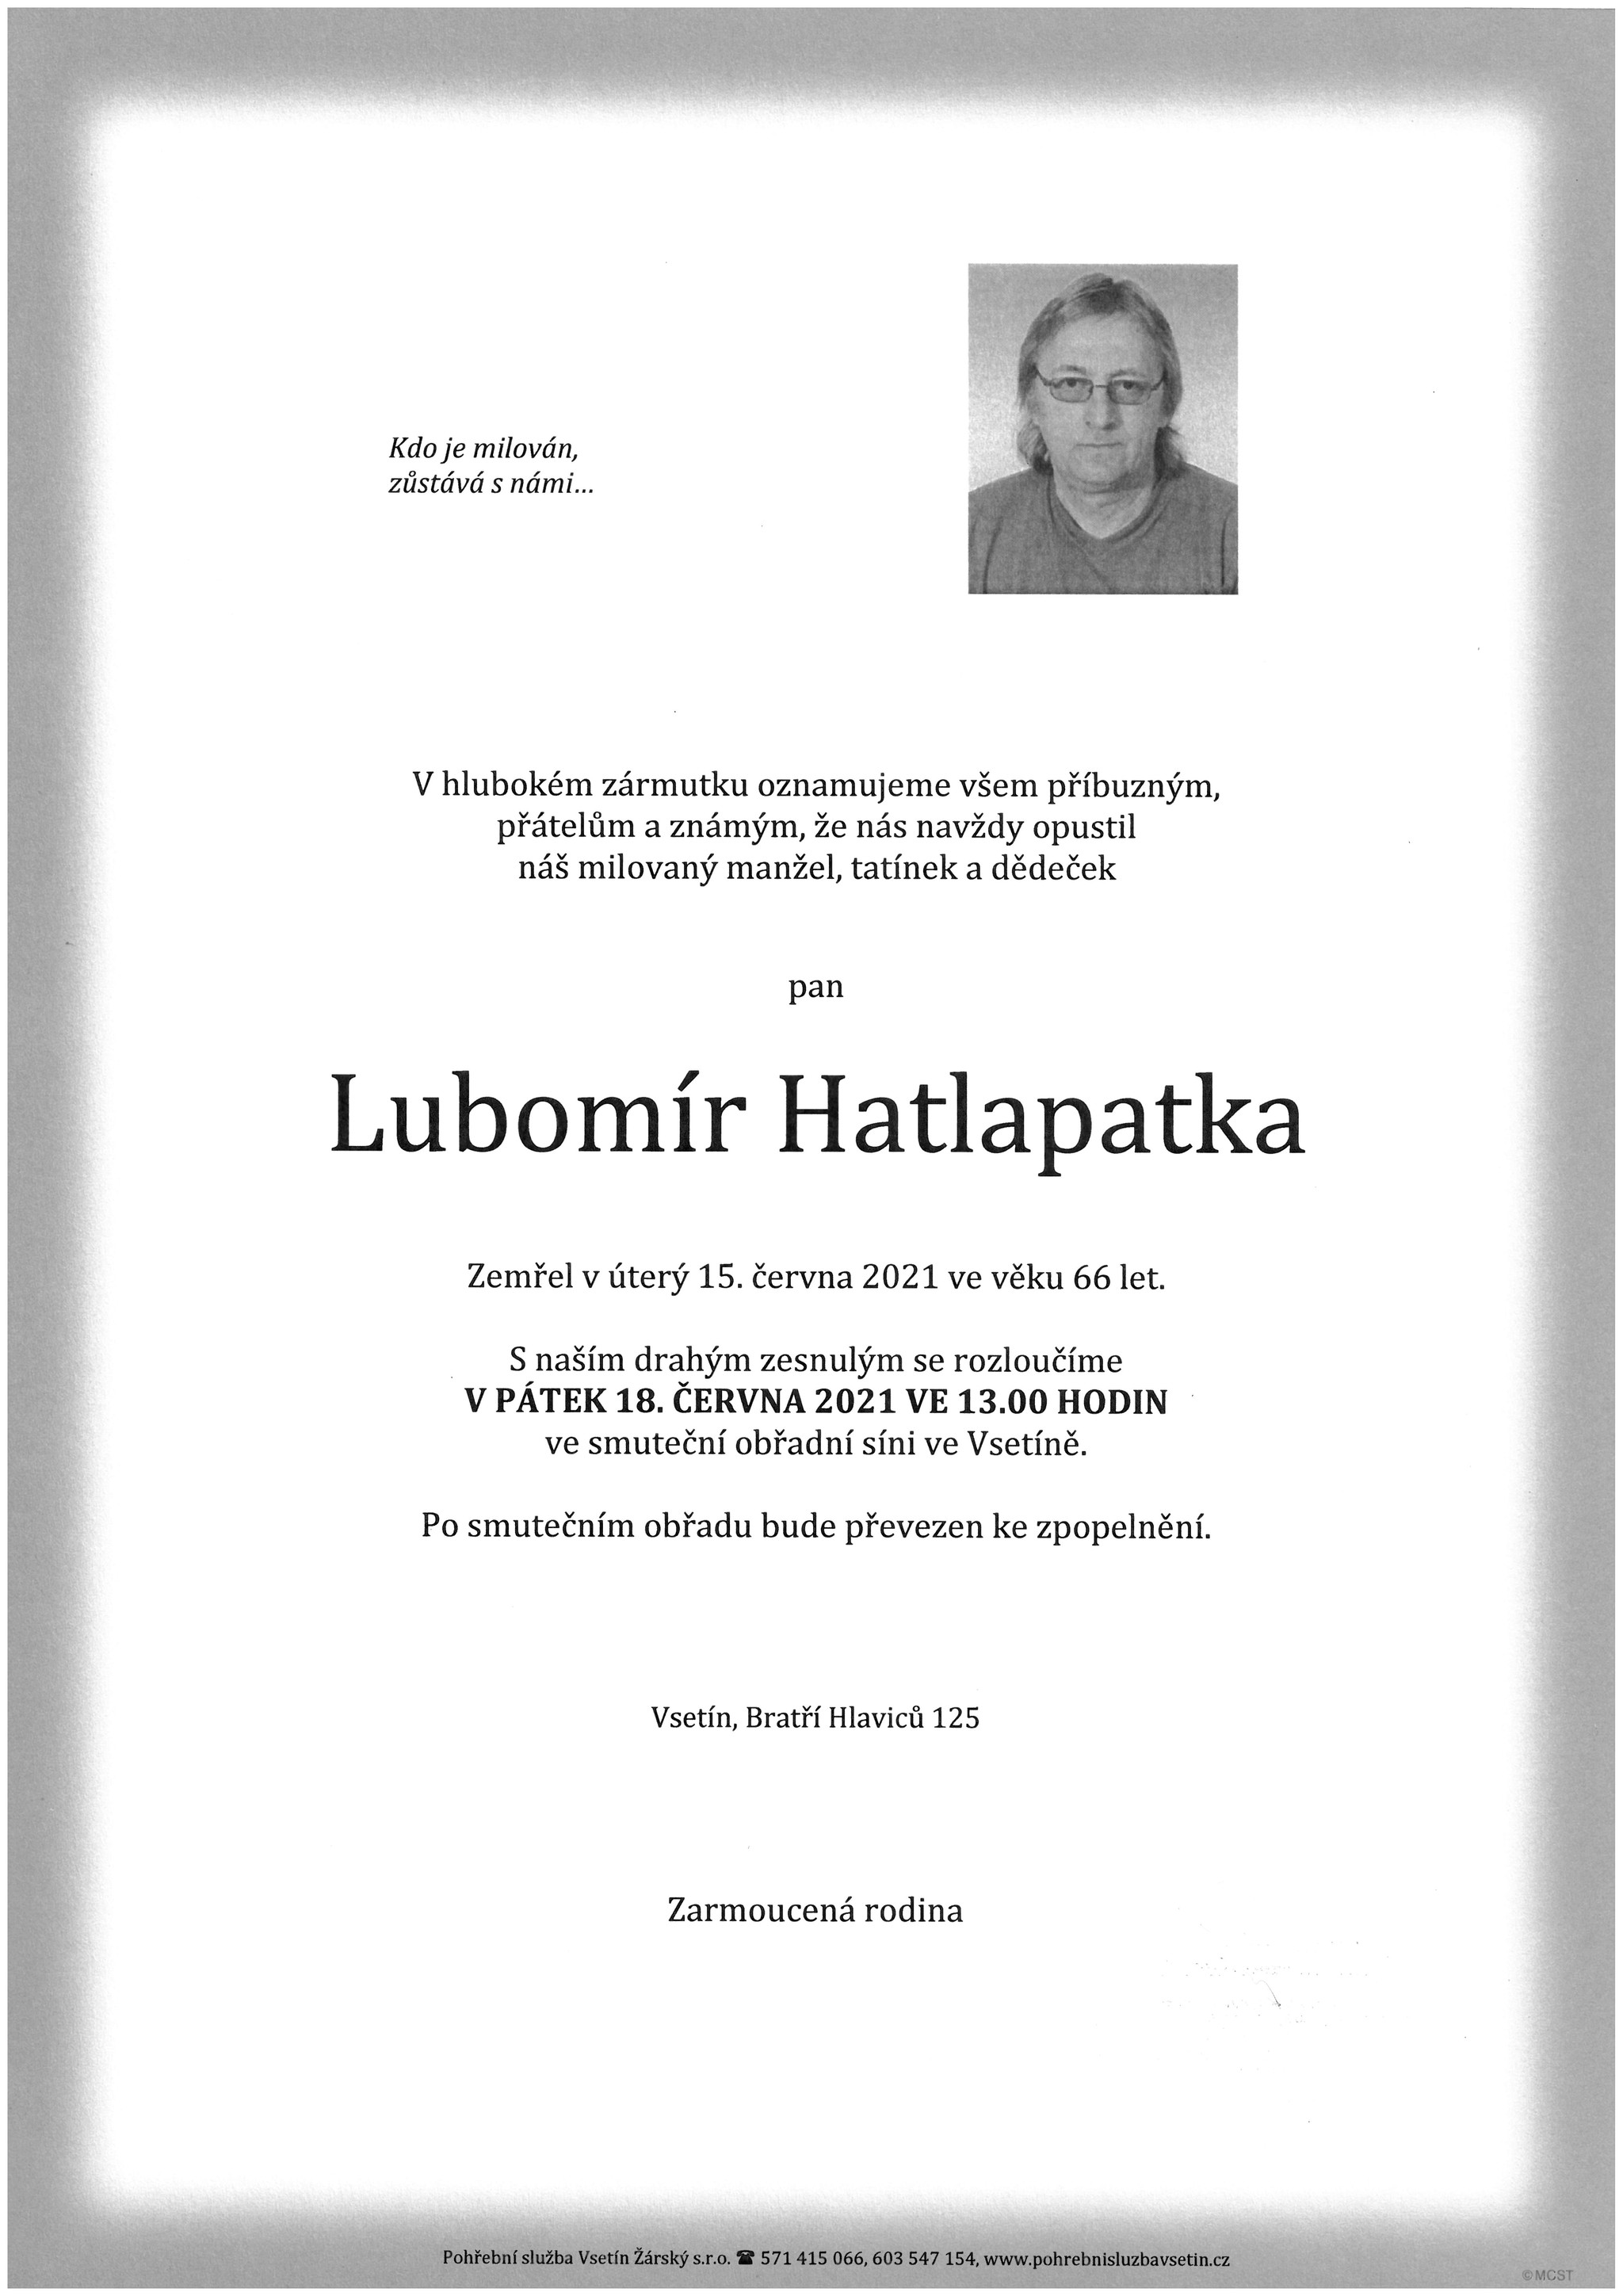 Lubomír Hatlapatka